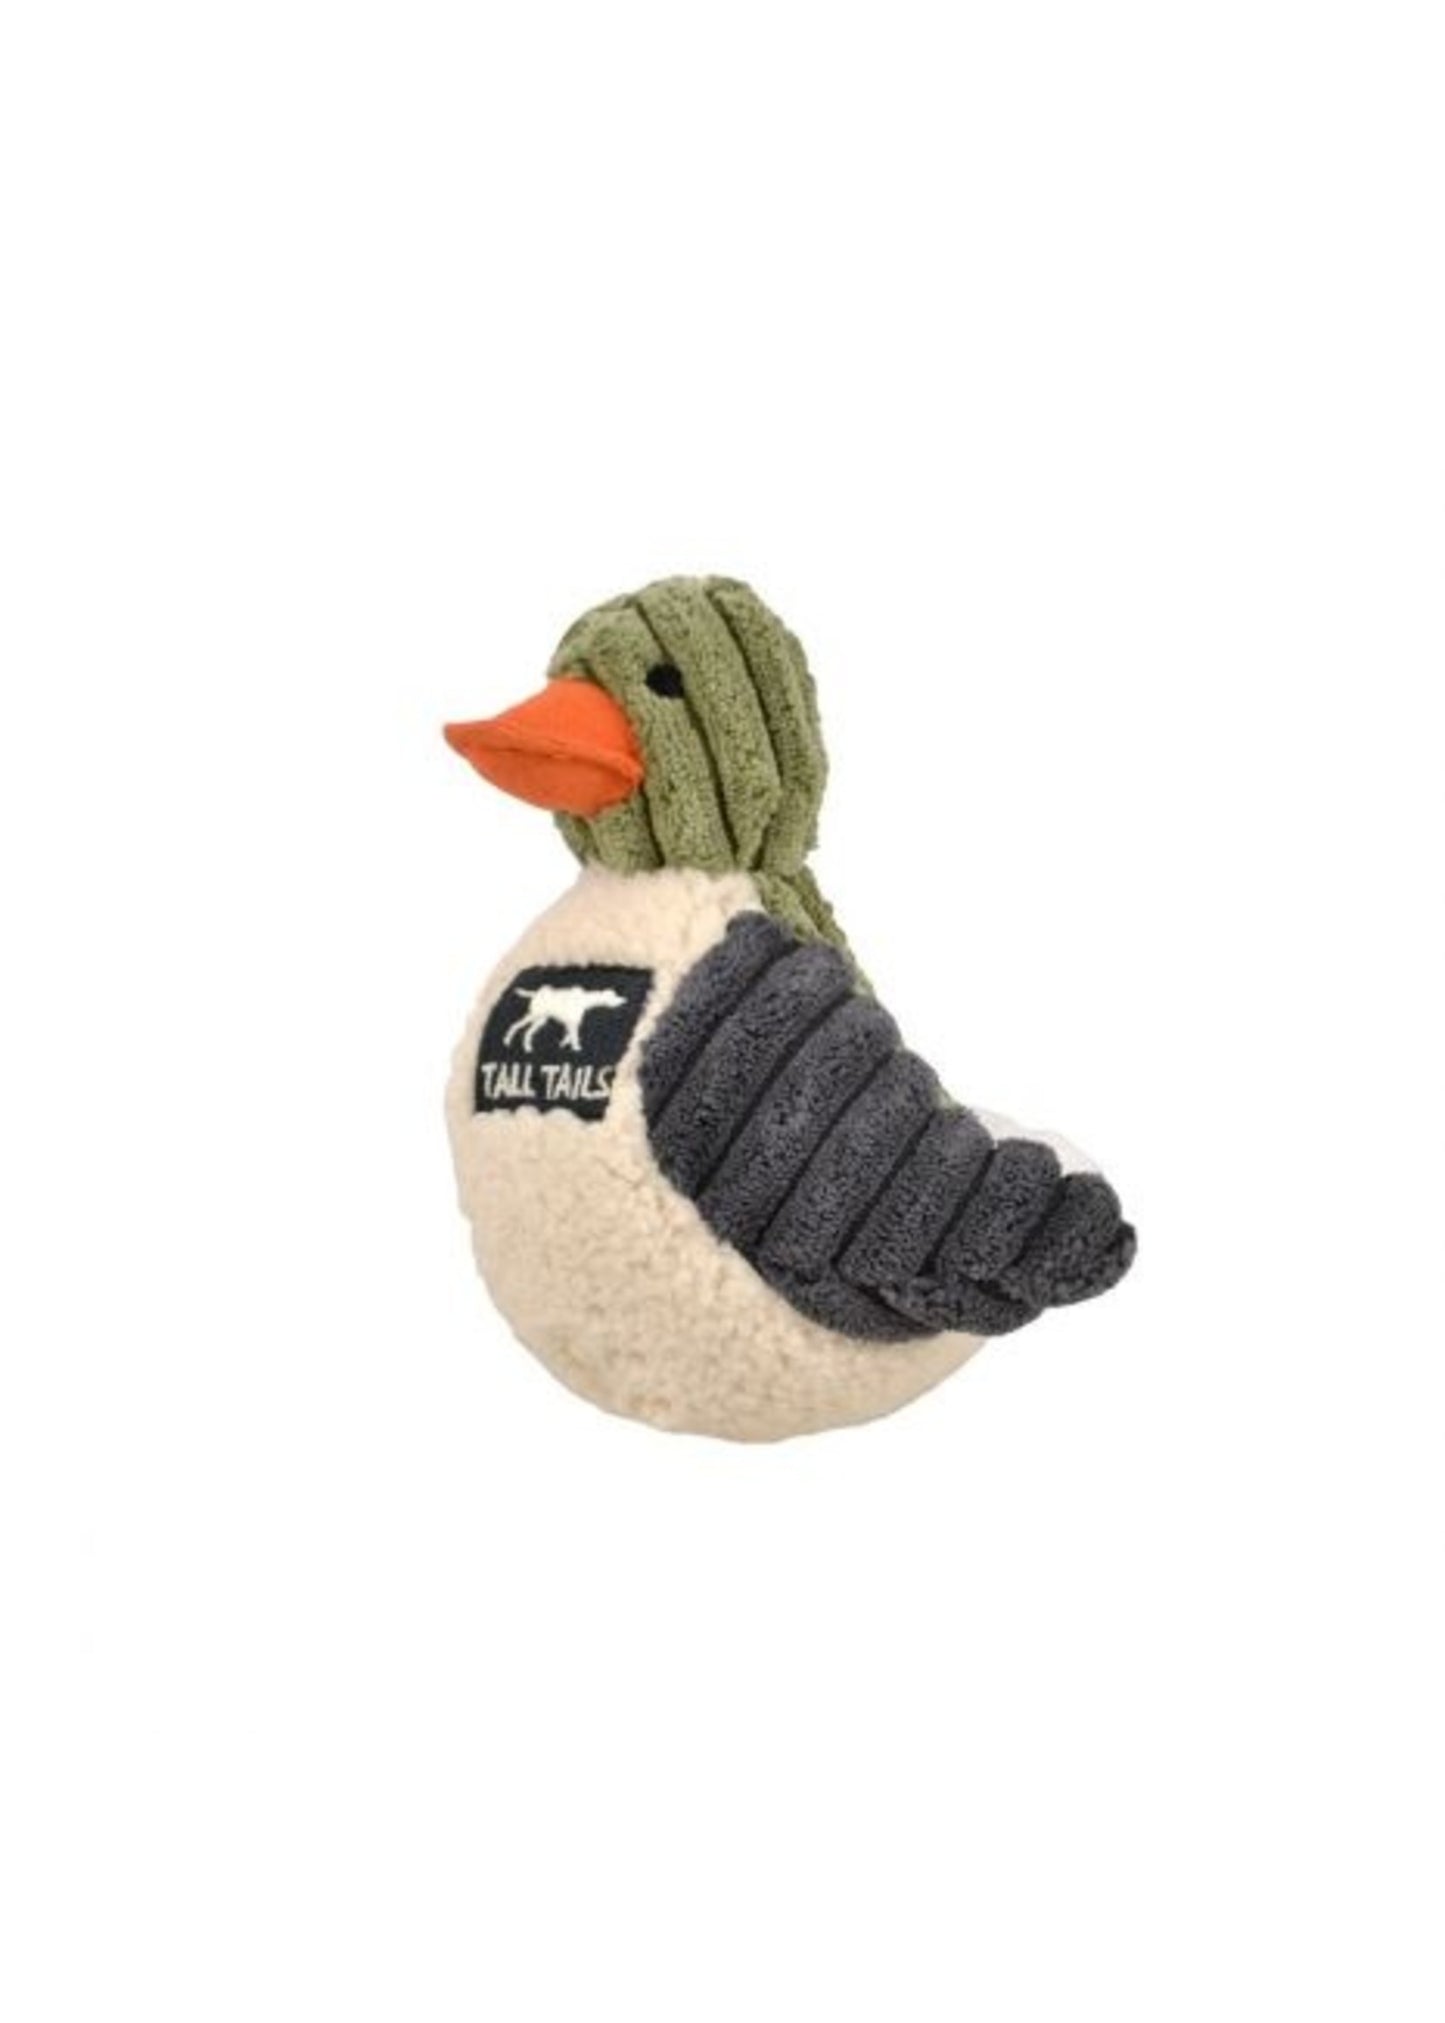 Plush Duckling Squeaker Toy